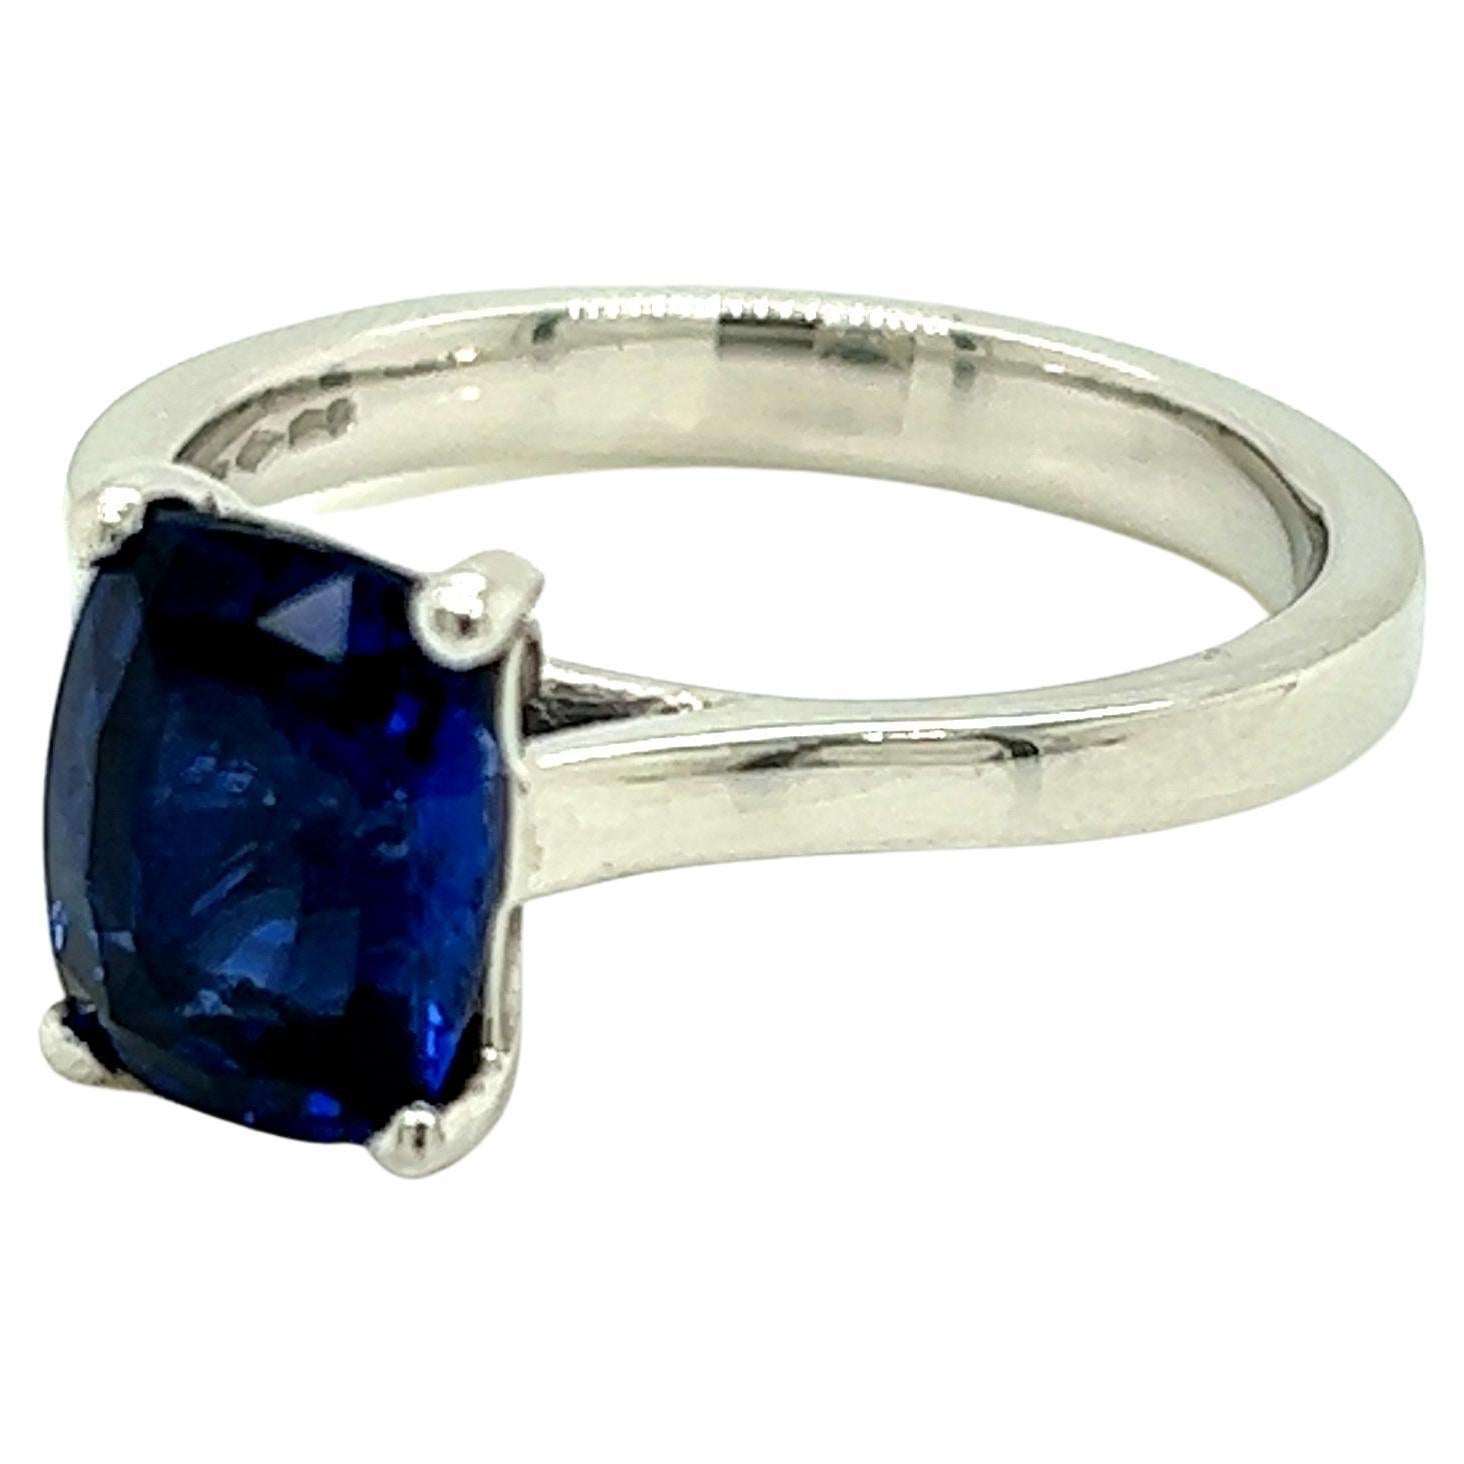 2.42 Carat Cushion cut Blue Sapphire Solitaire Platinum Ring